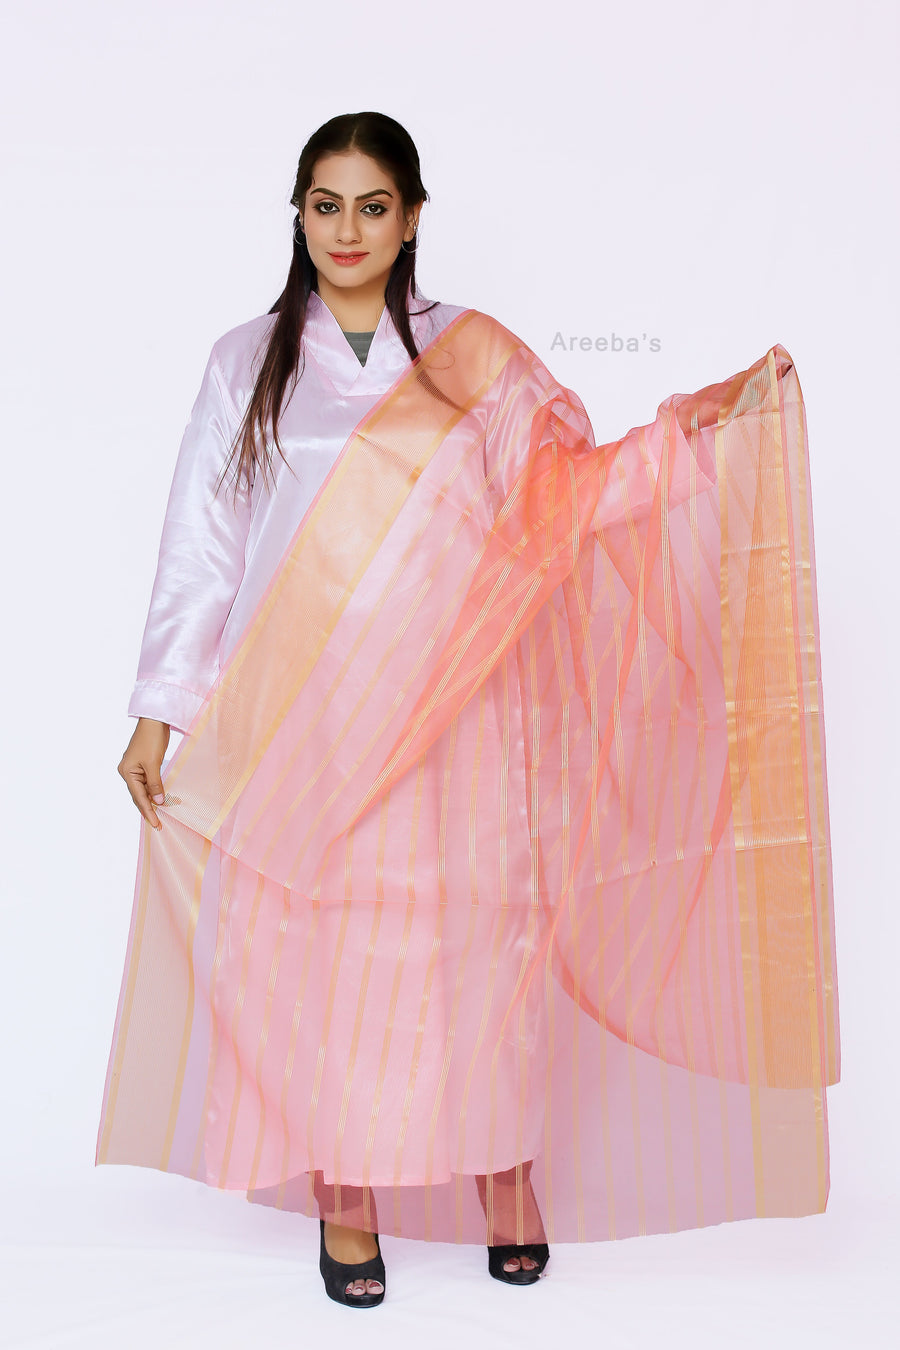 Digital printed organza- Areeba's Couture